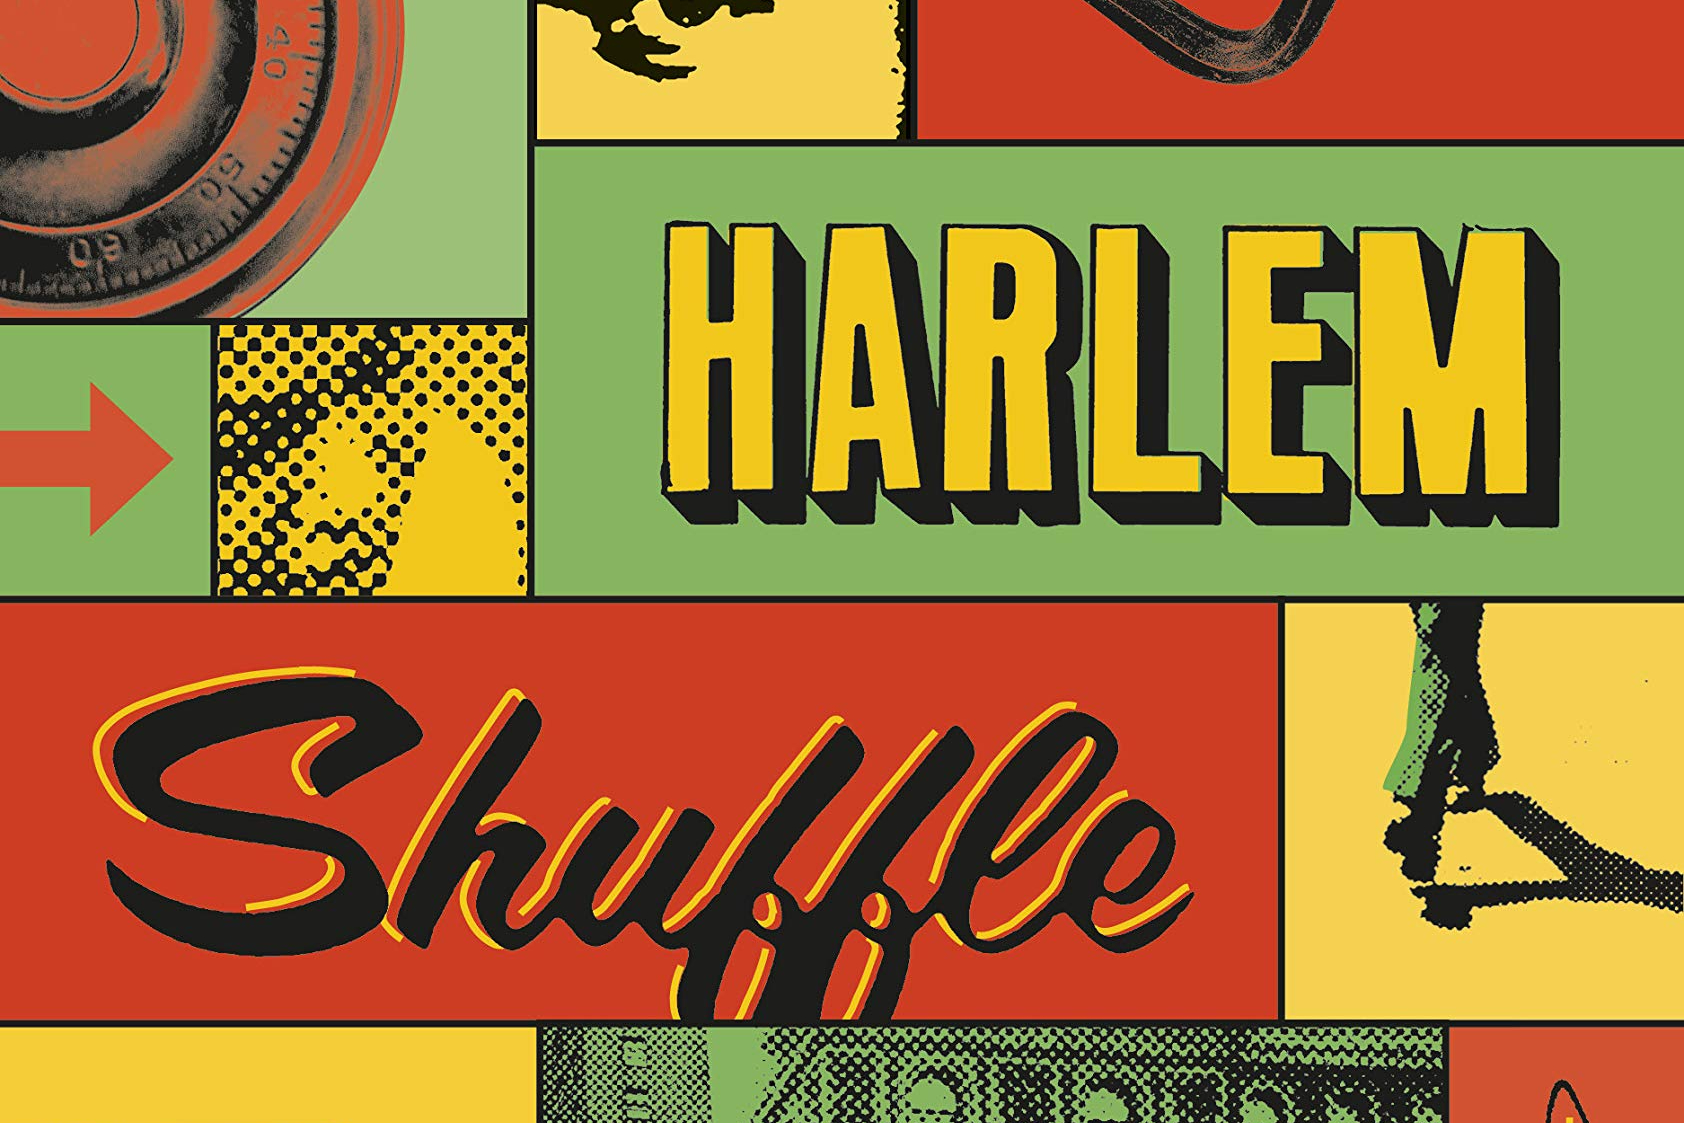 Harlem Shuffle by Colson Whitehead Reviewed by Connie Nordhielm Wooldridge